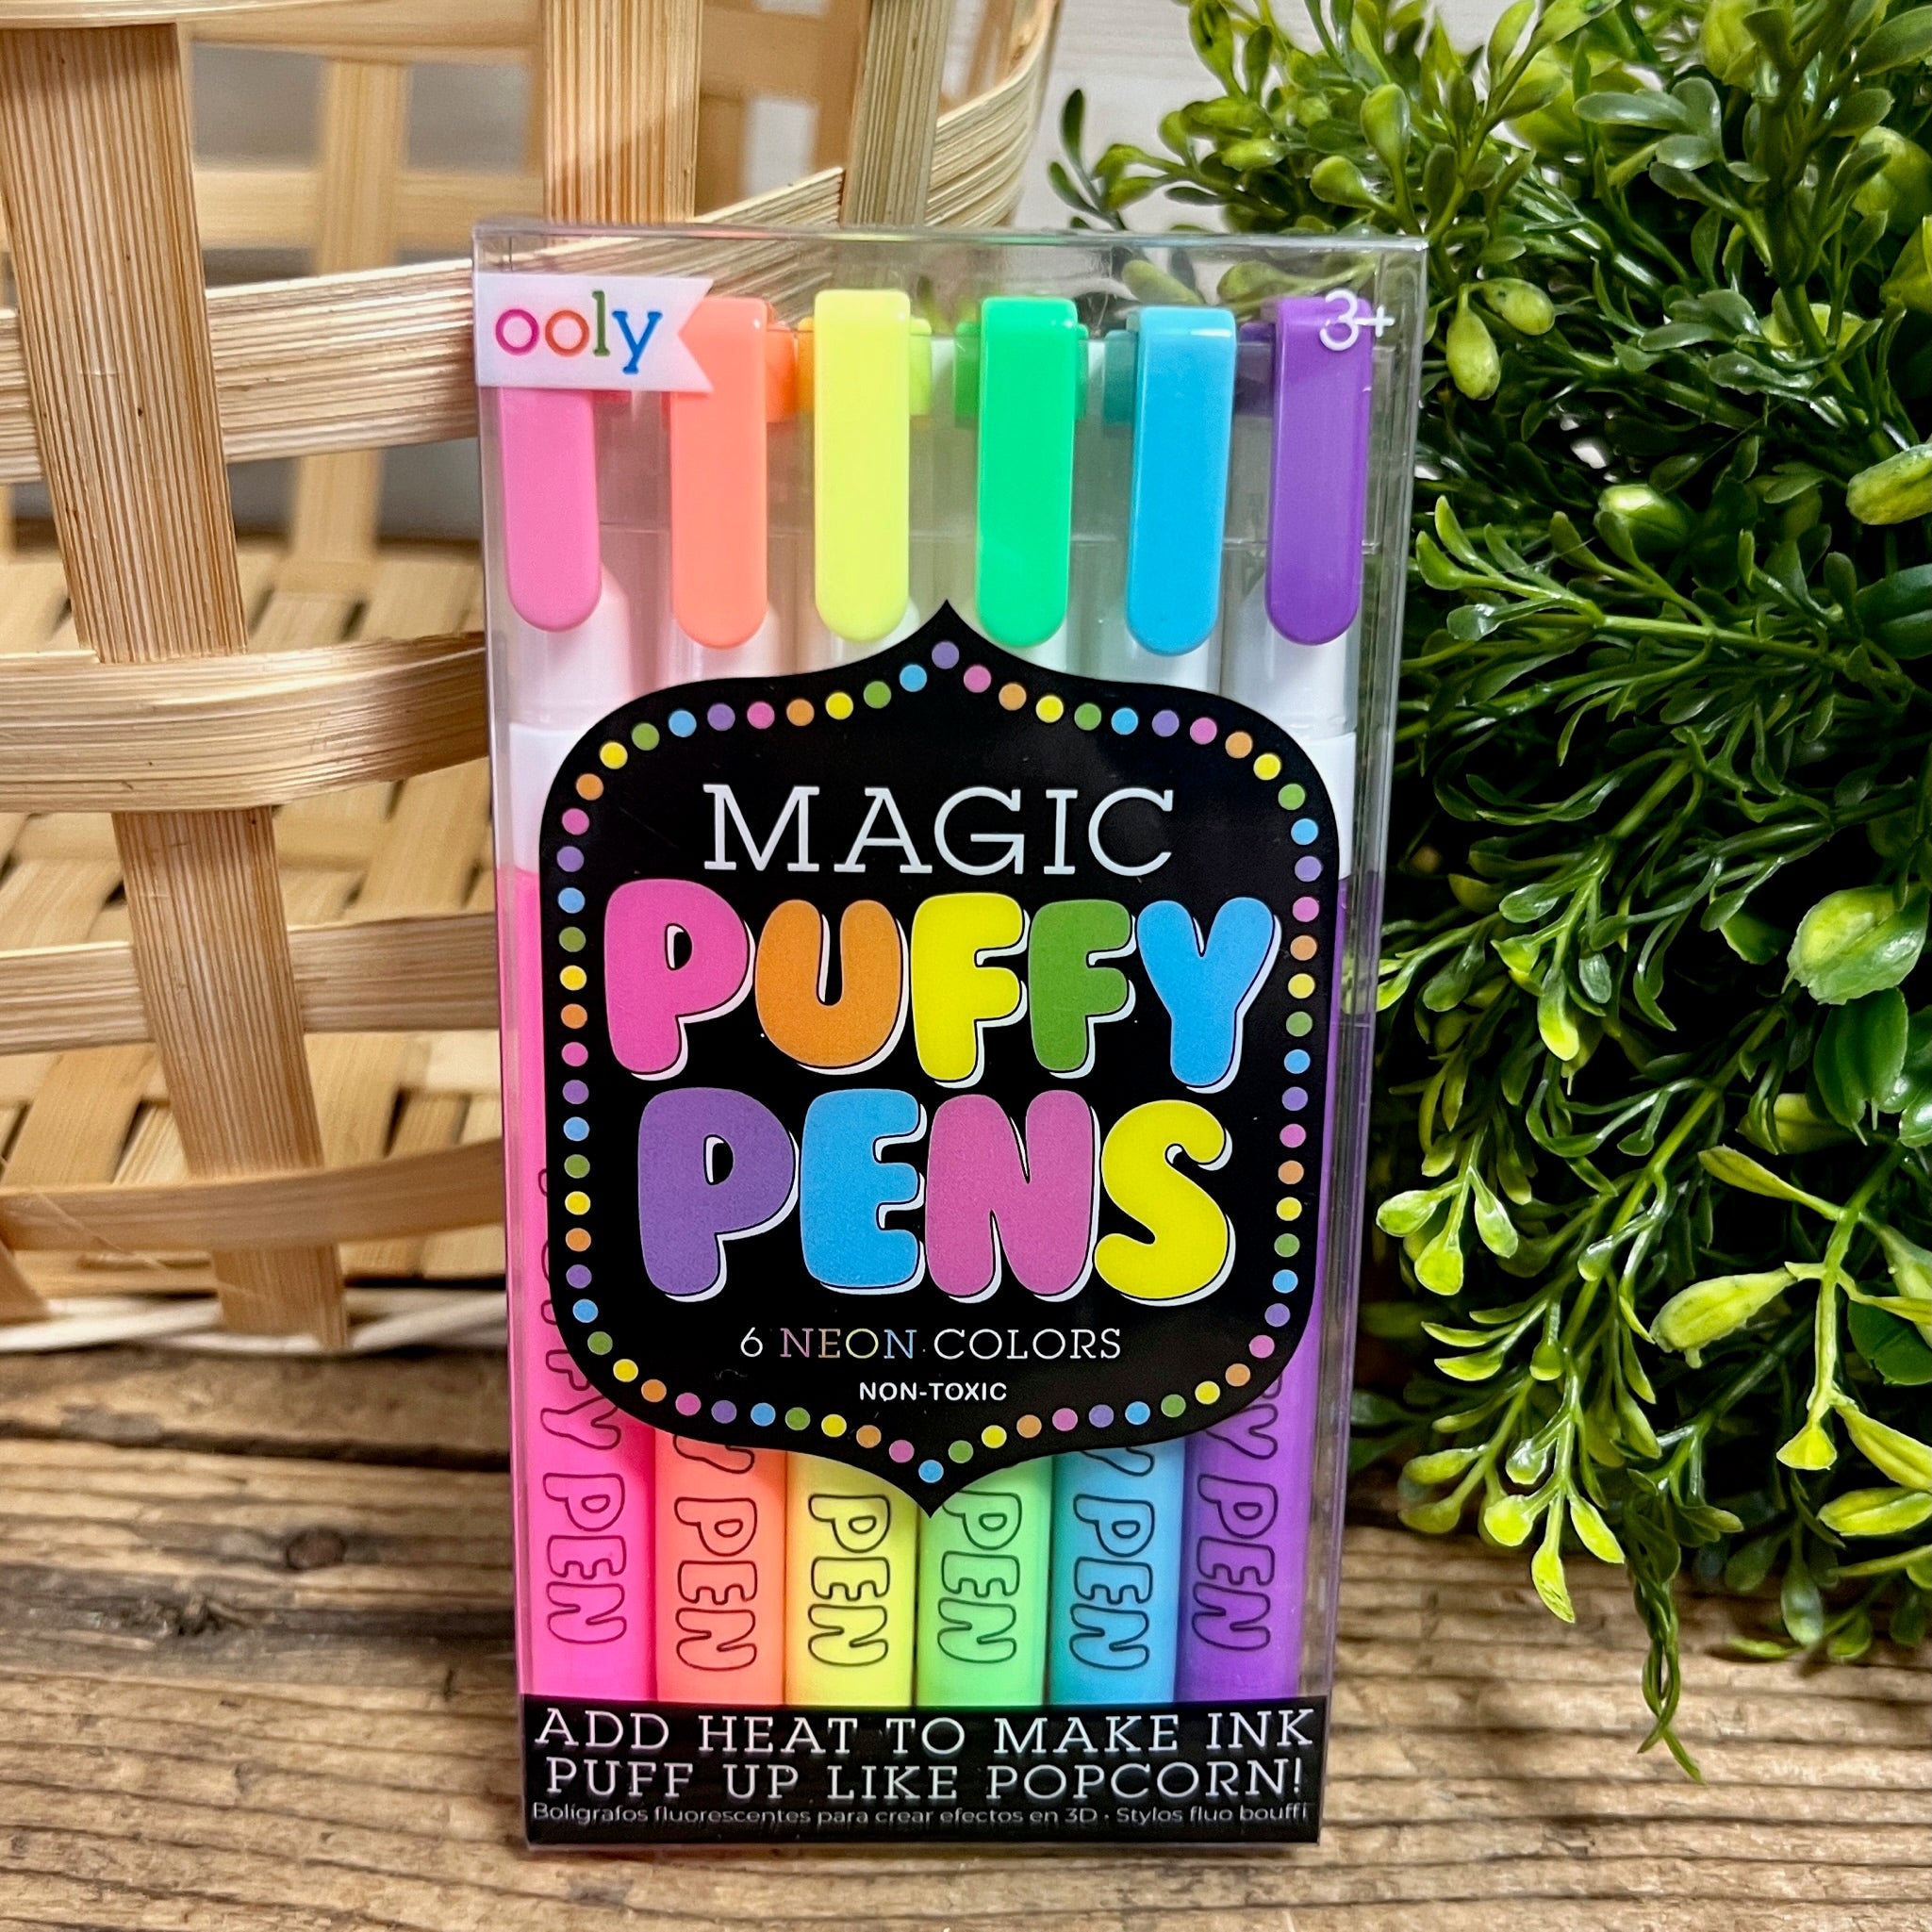 LBT - MAGIC Puffy Pens!! Enjoy magical art like you've never